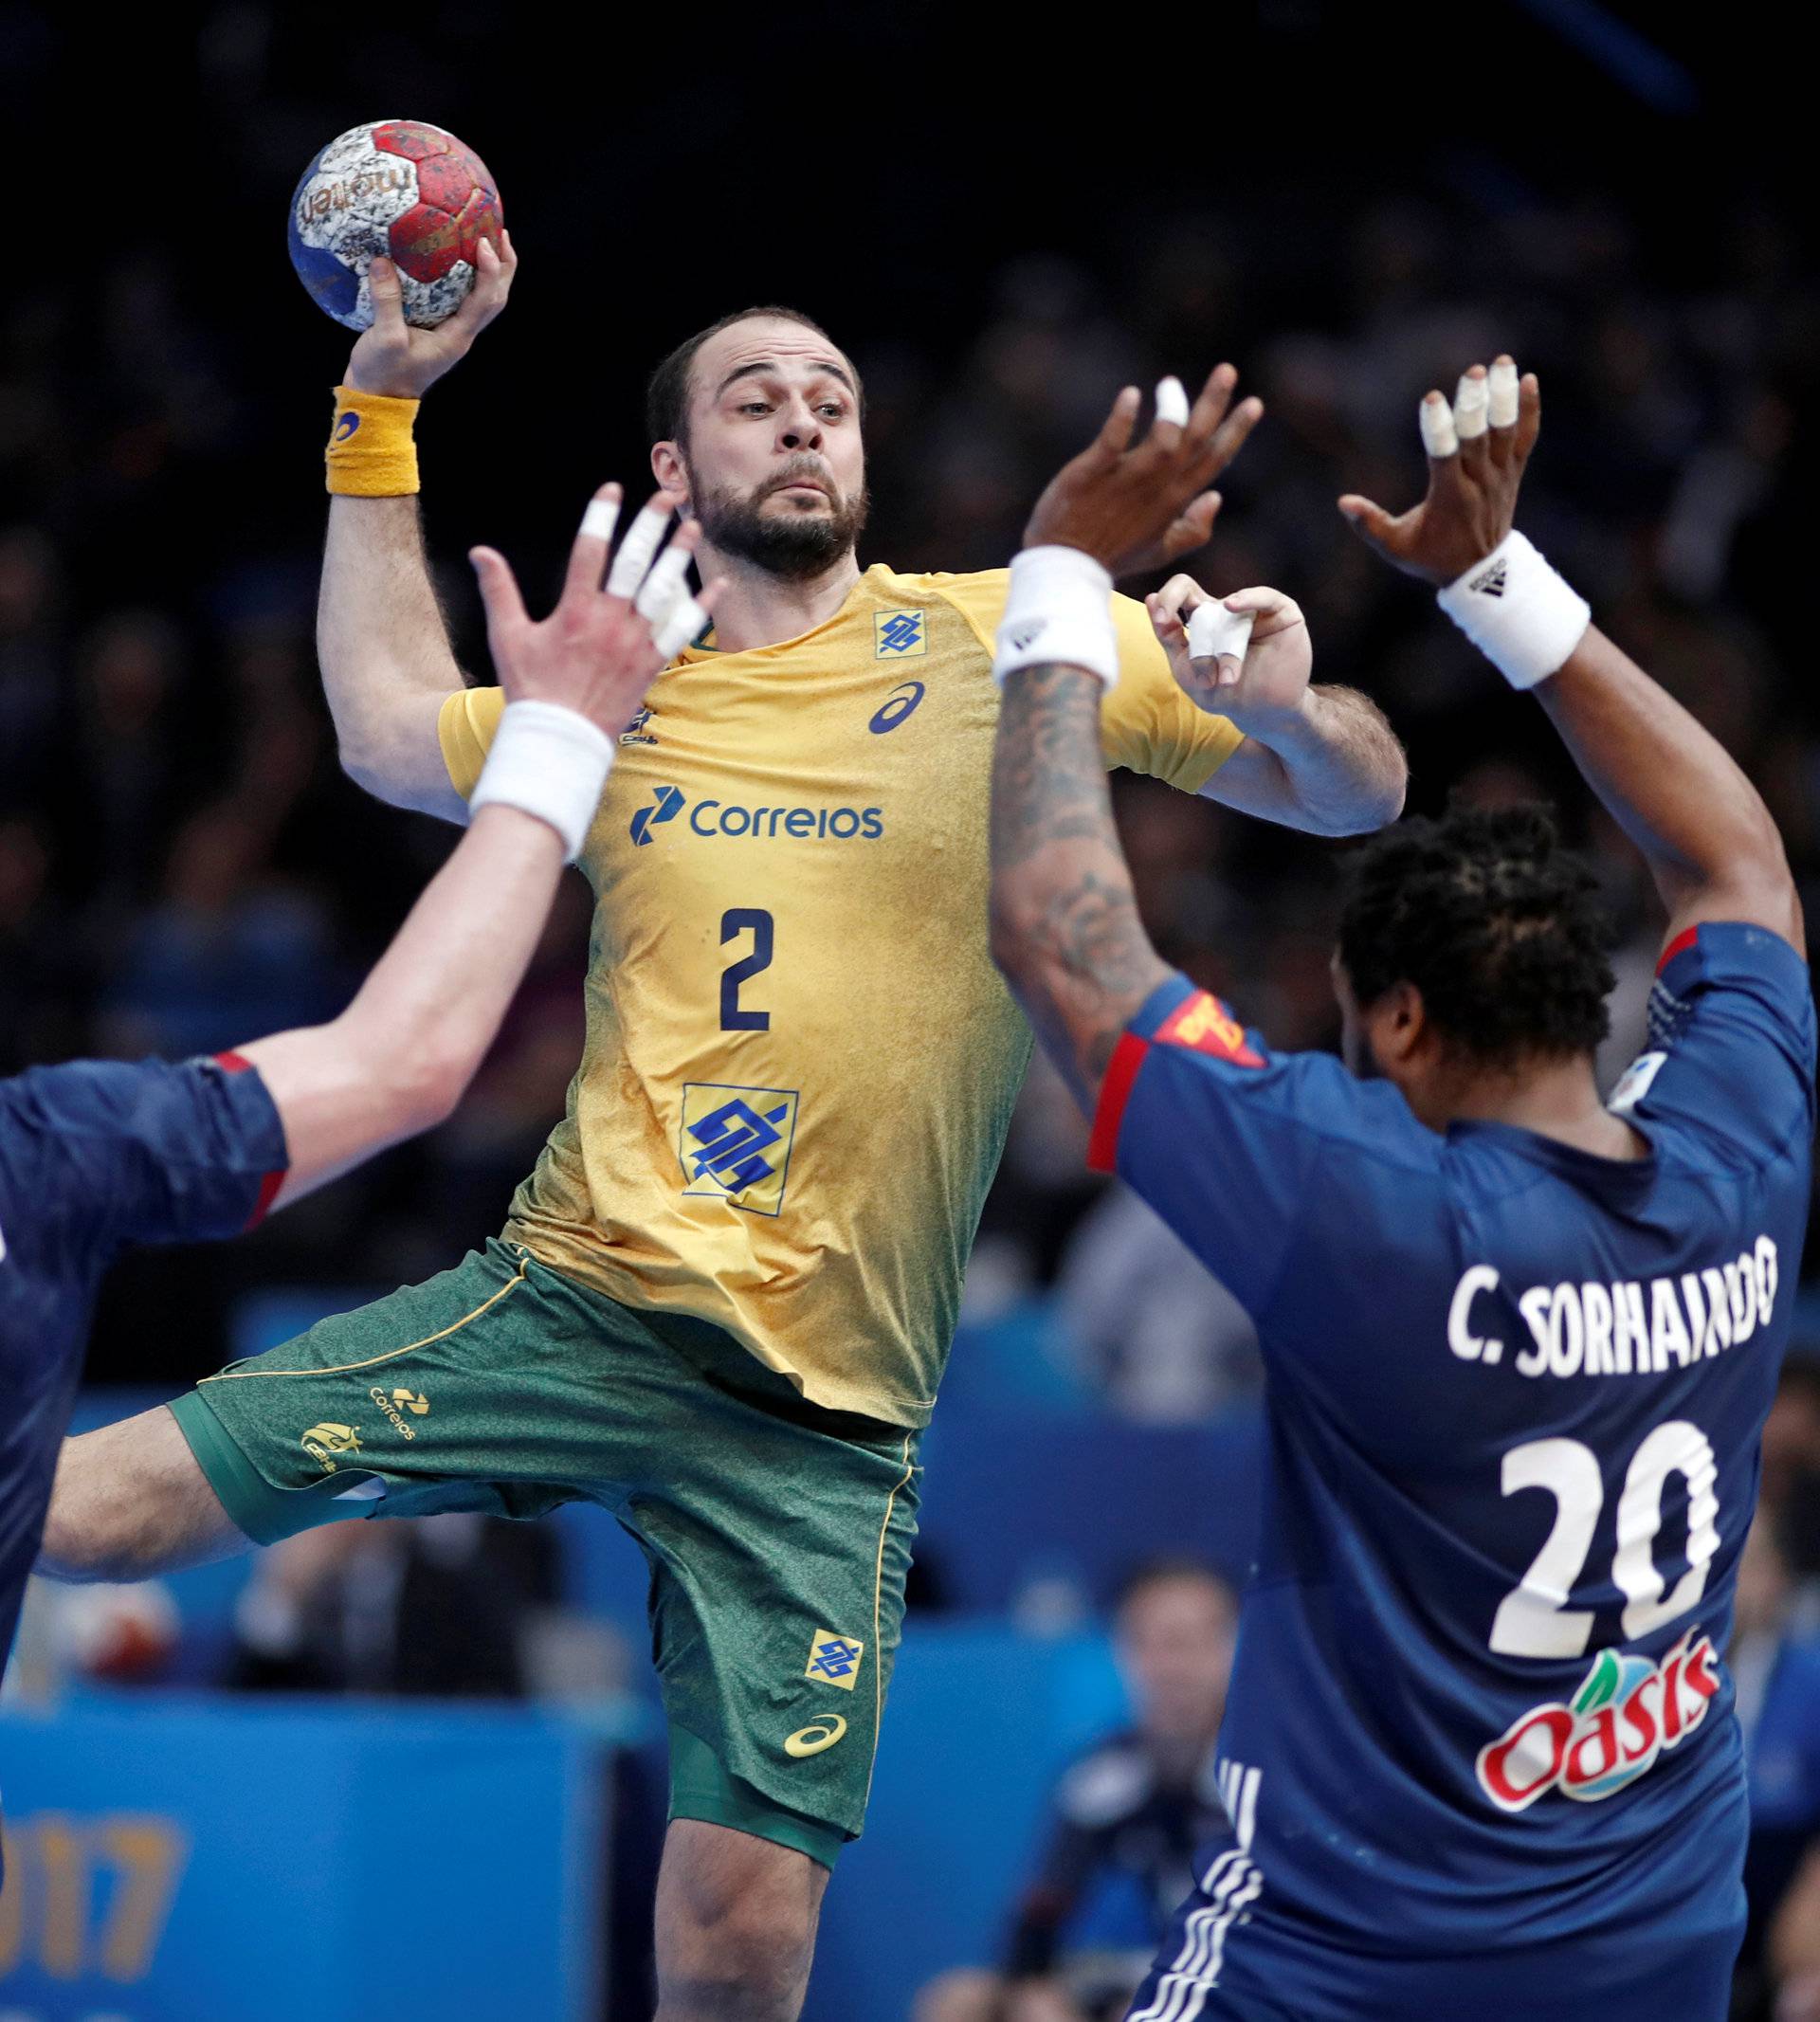 Men's Handball - France v Brazil - 2017 Men's World Championship Main Round - Group A